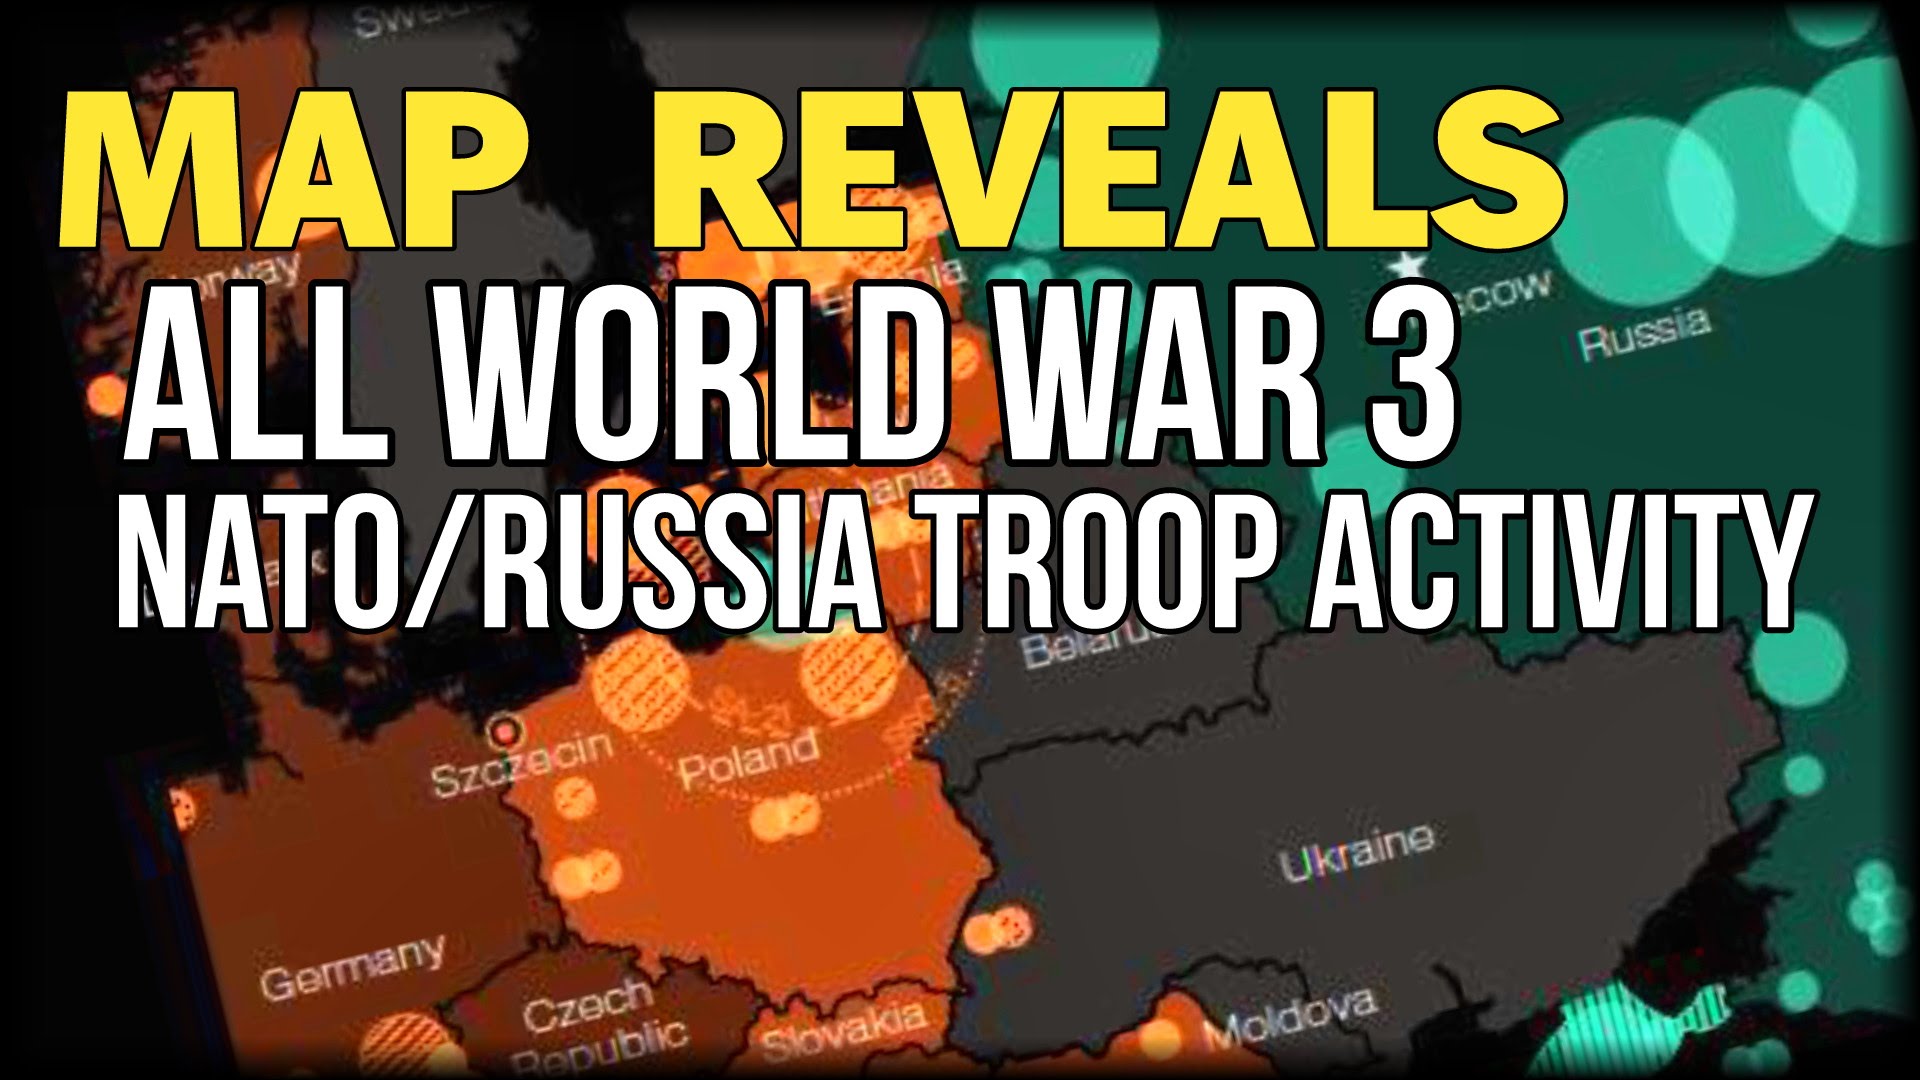 MAP REVEALS ALL WORLD WAR 3 NATO/RUSSIA TROOP ACTIVITY